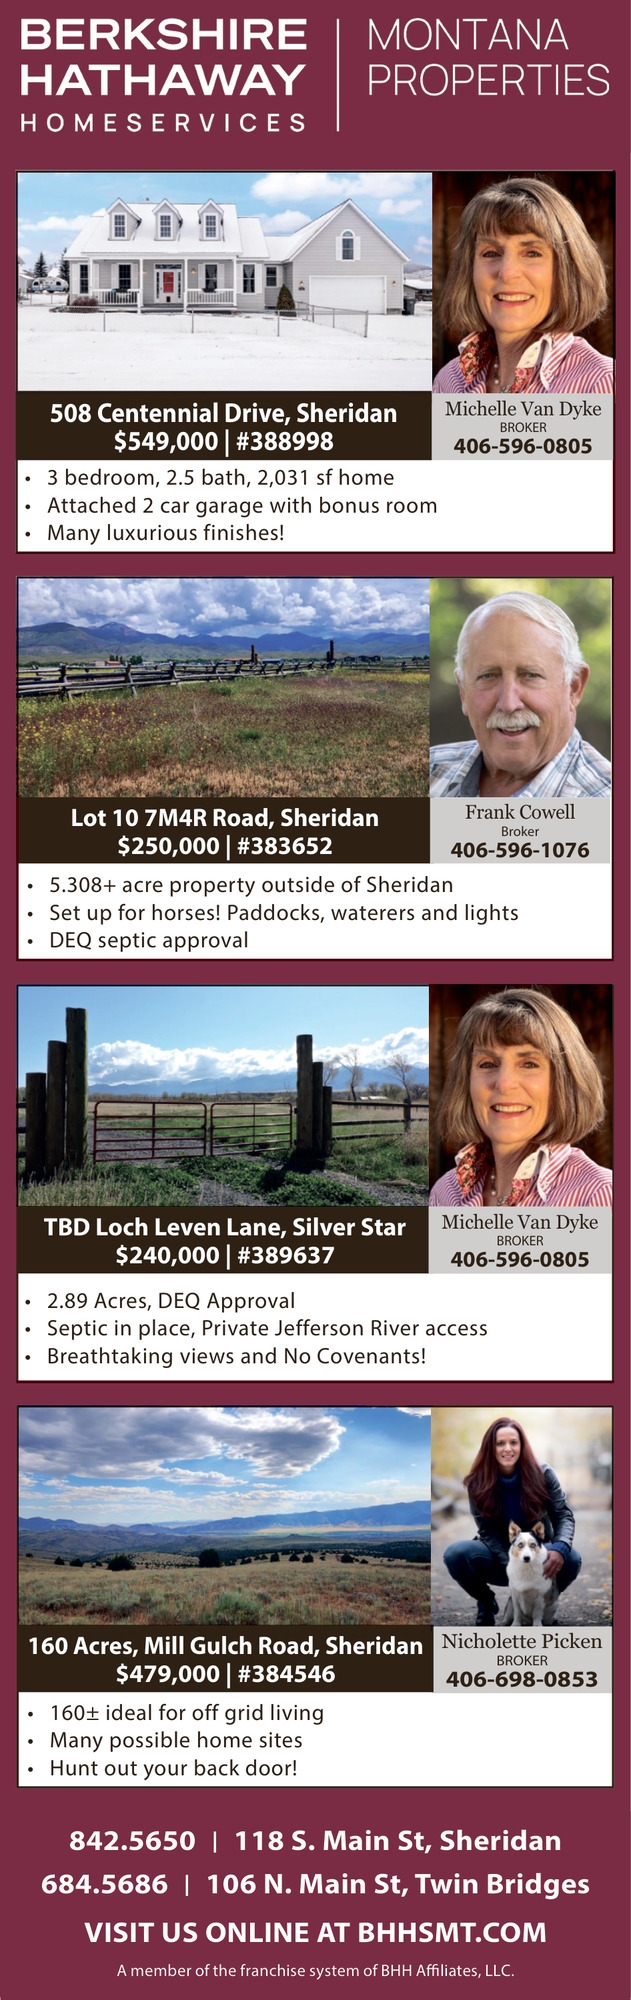 Montana Properties, Michelle Van Dyke / Nicholette Picken / Frank Cowell - Berkshire Hathaway HomeServices Montana Properties